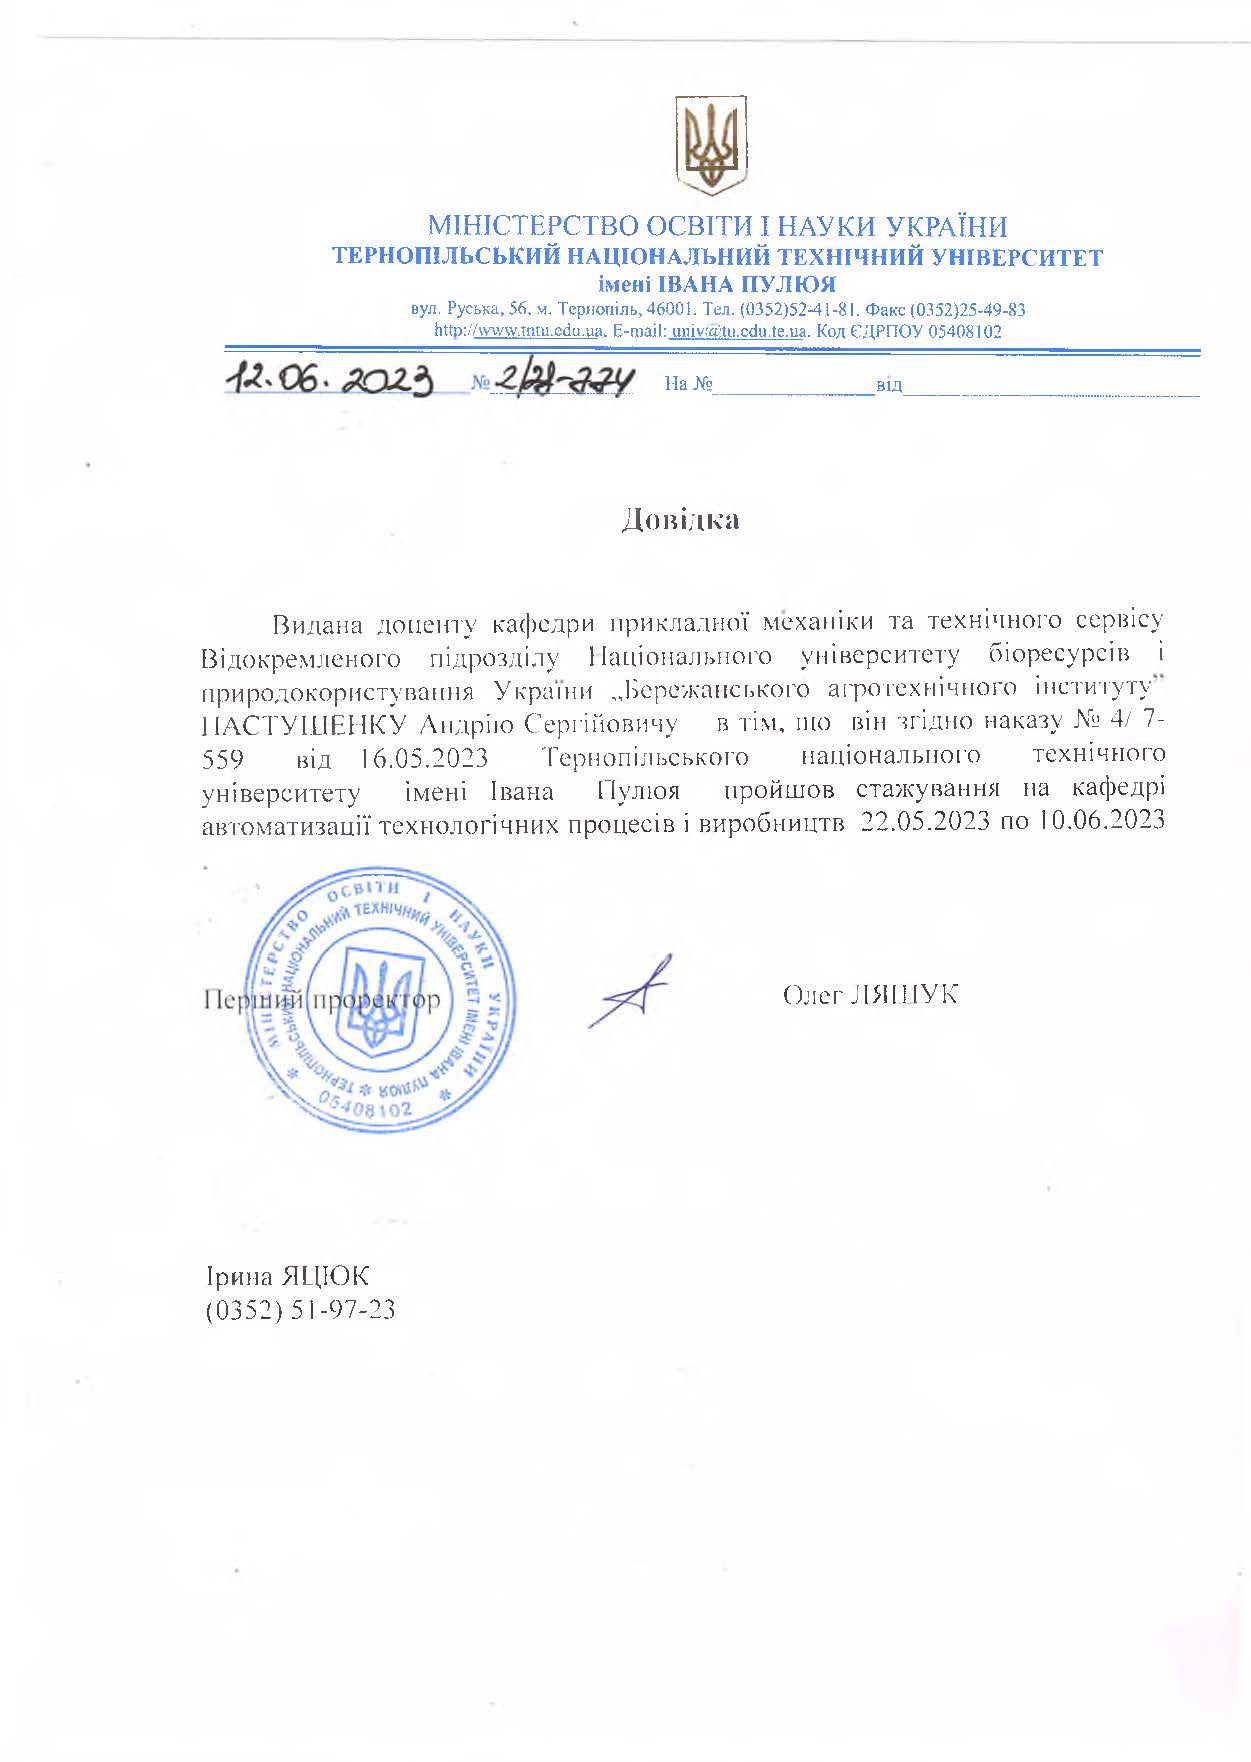 Certificate Stemkovska